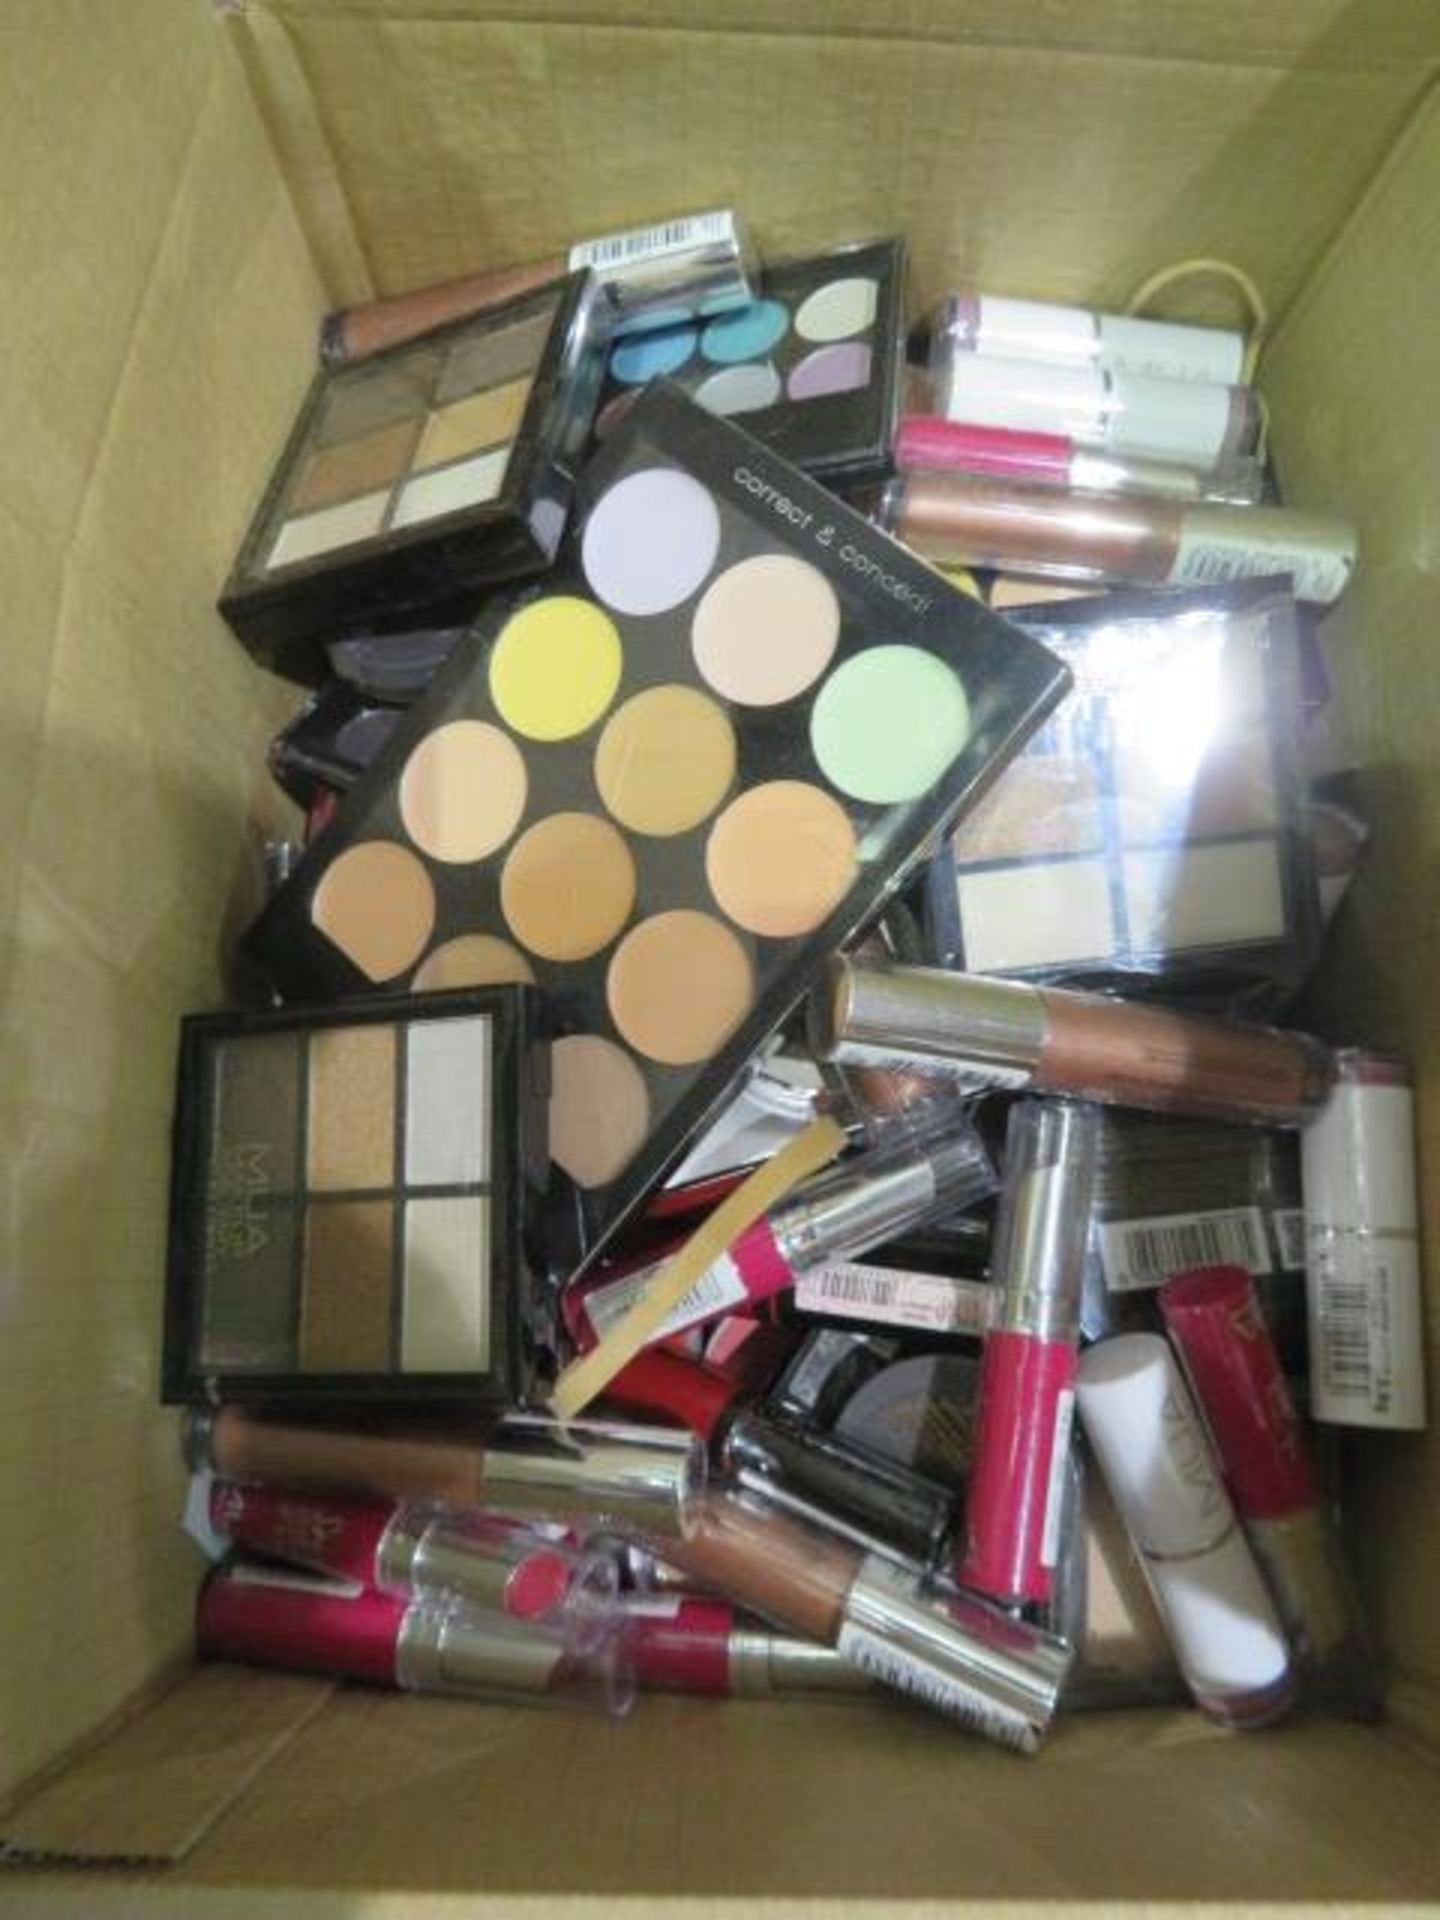 Circa. 200 items of various new make up acadamy make up to include: sweet sheen lip balm, 6 shade